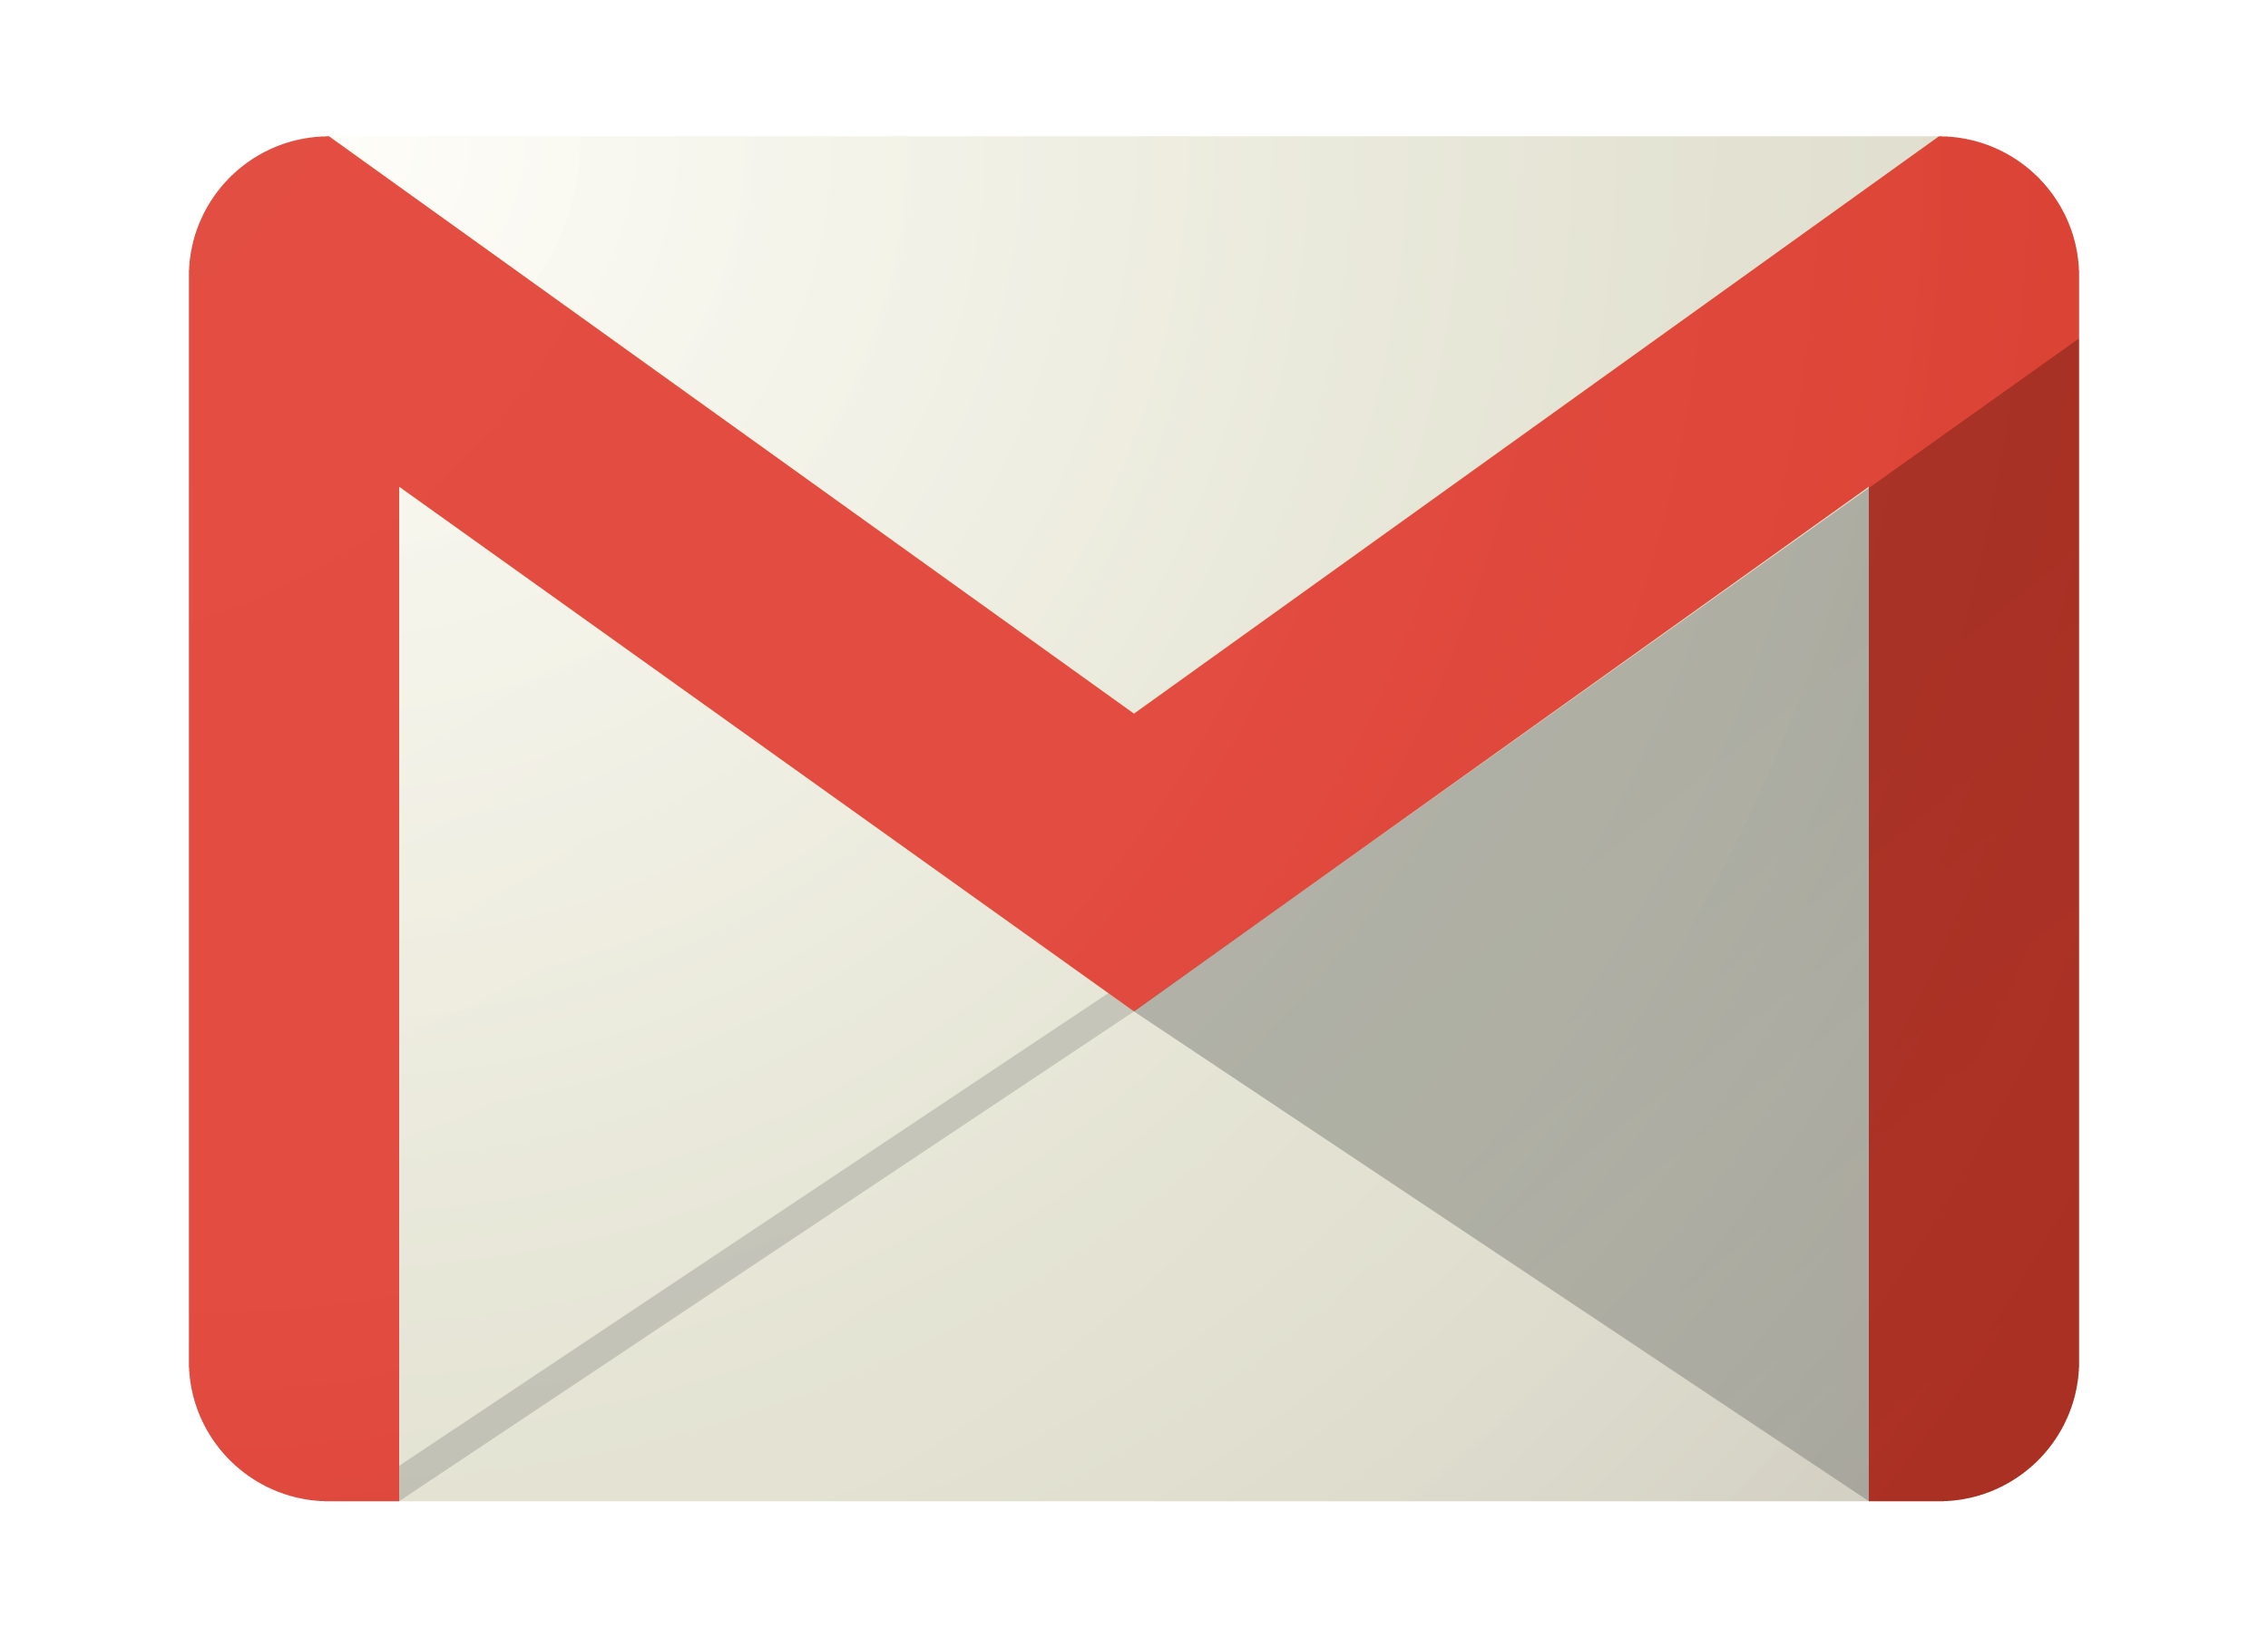 Email Logo Png - Free Transparent PNG Logos